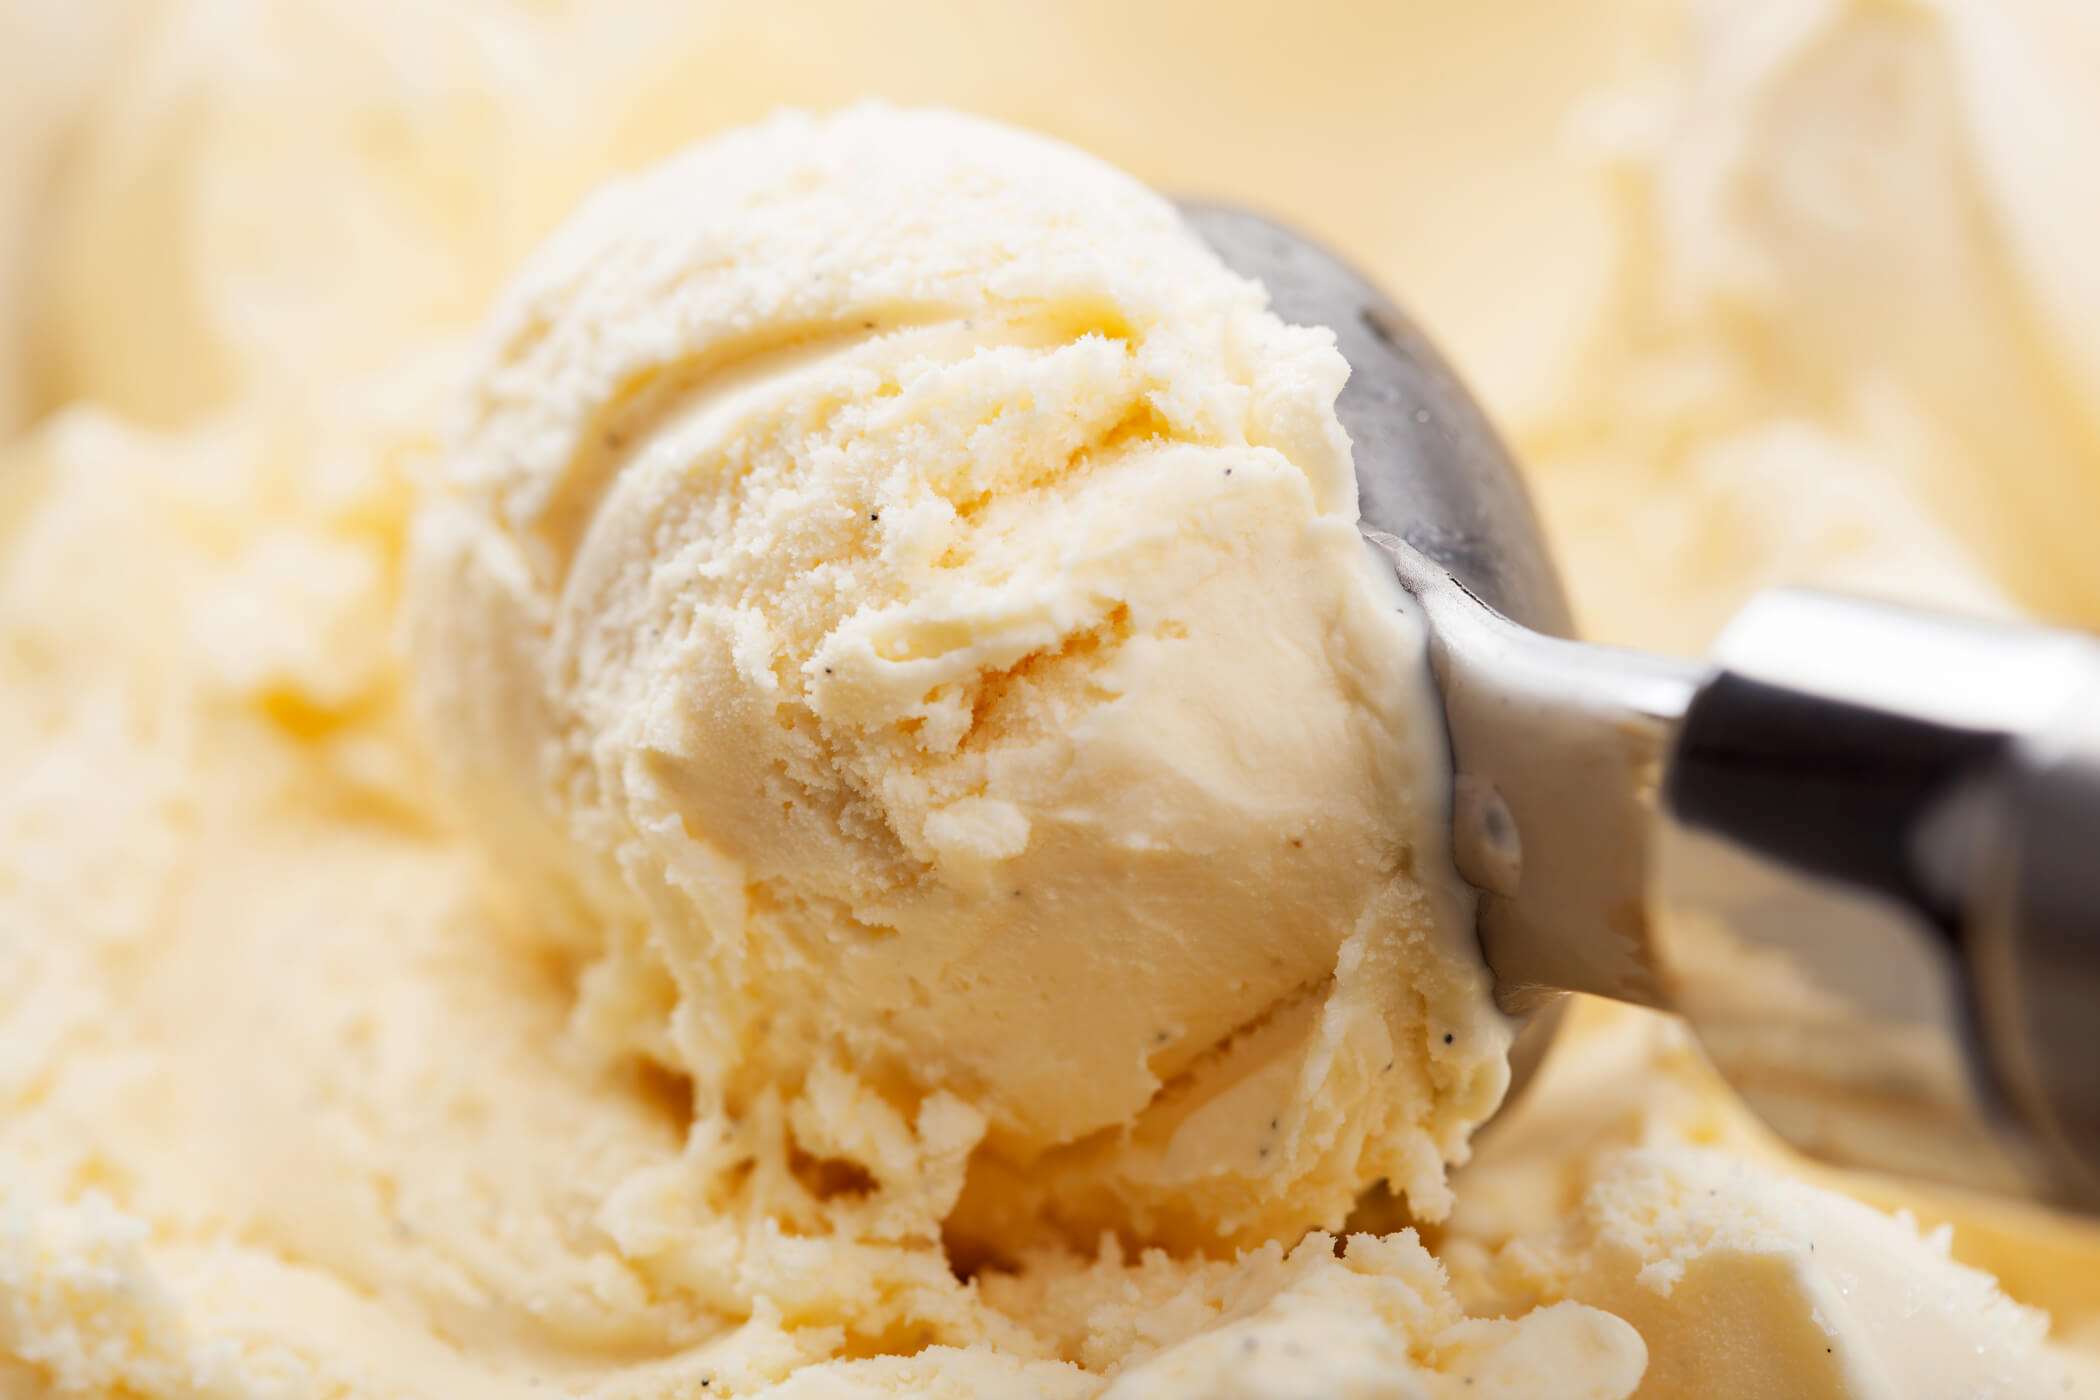 Ice cream scoop and vanilla ice cream